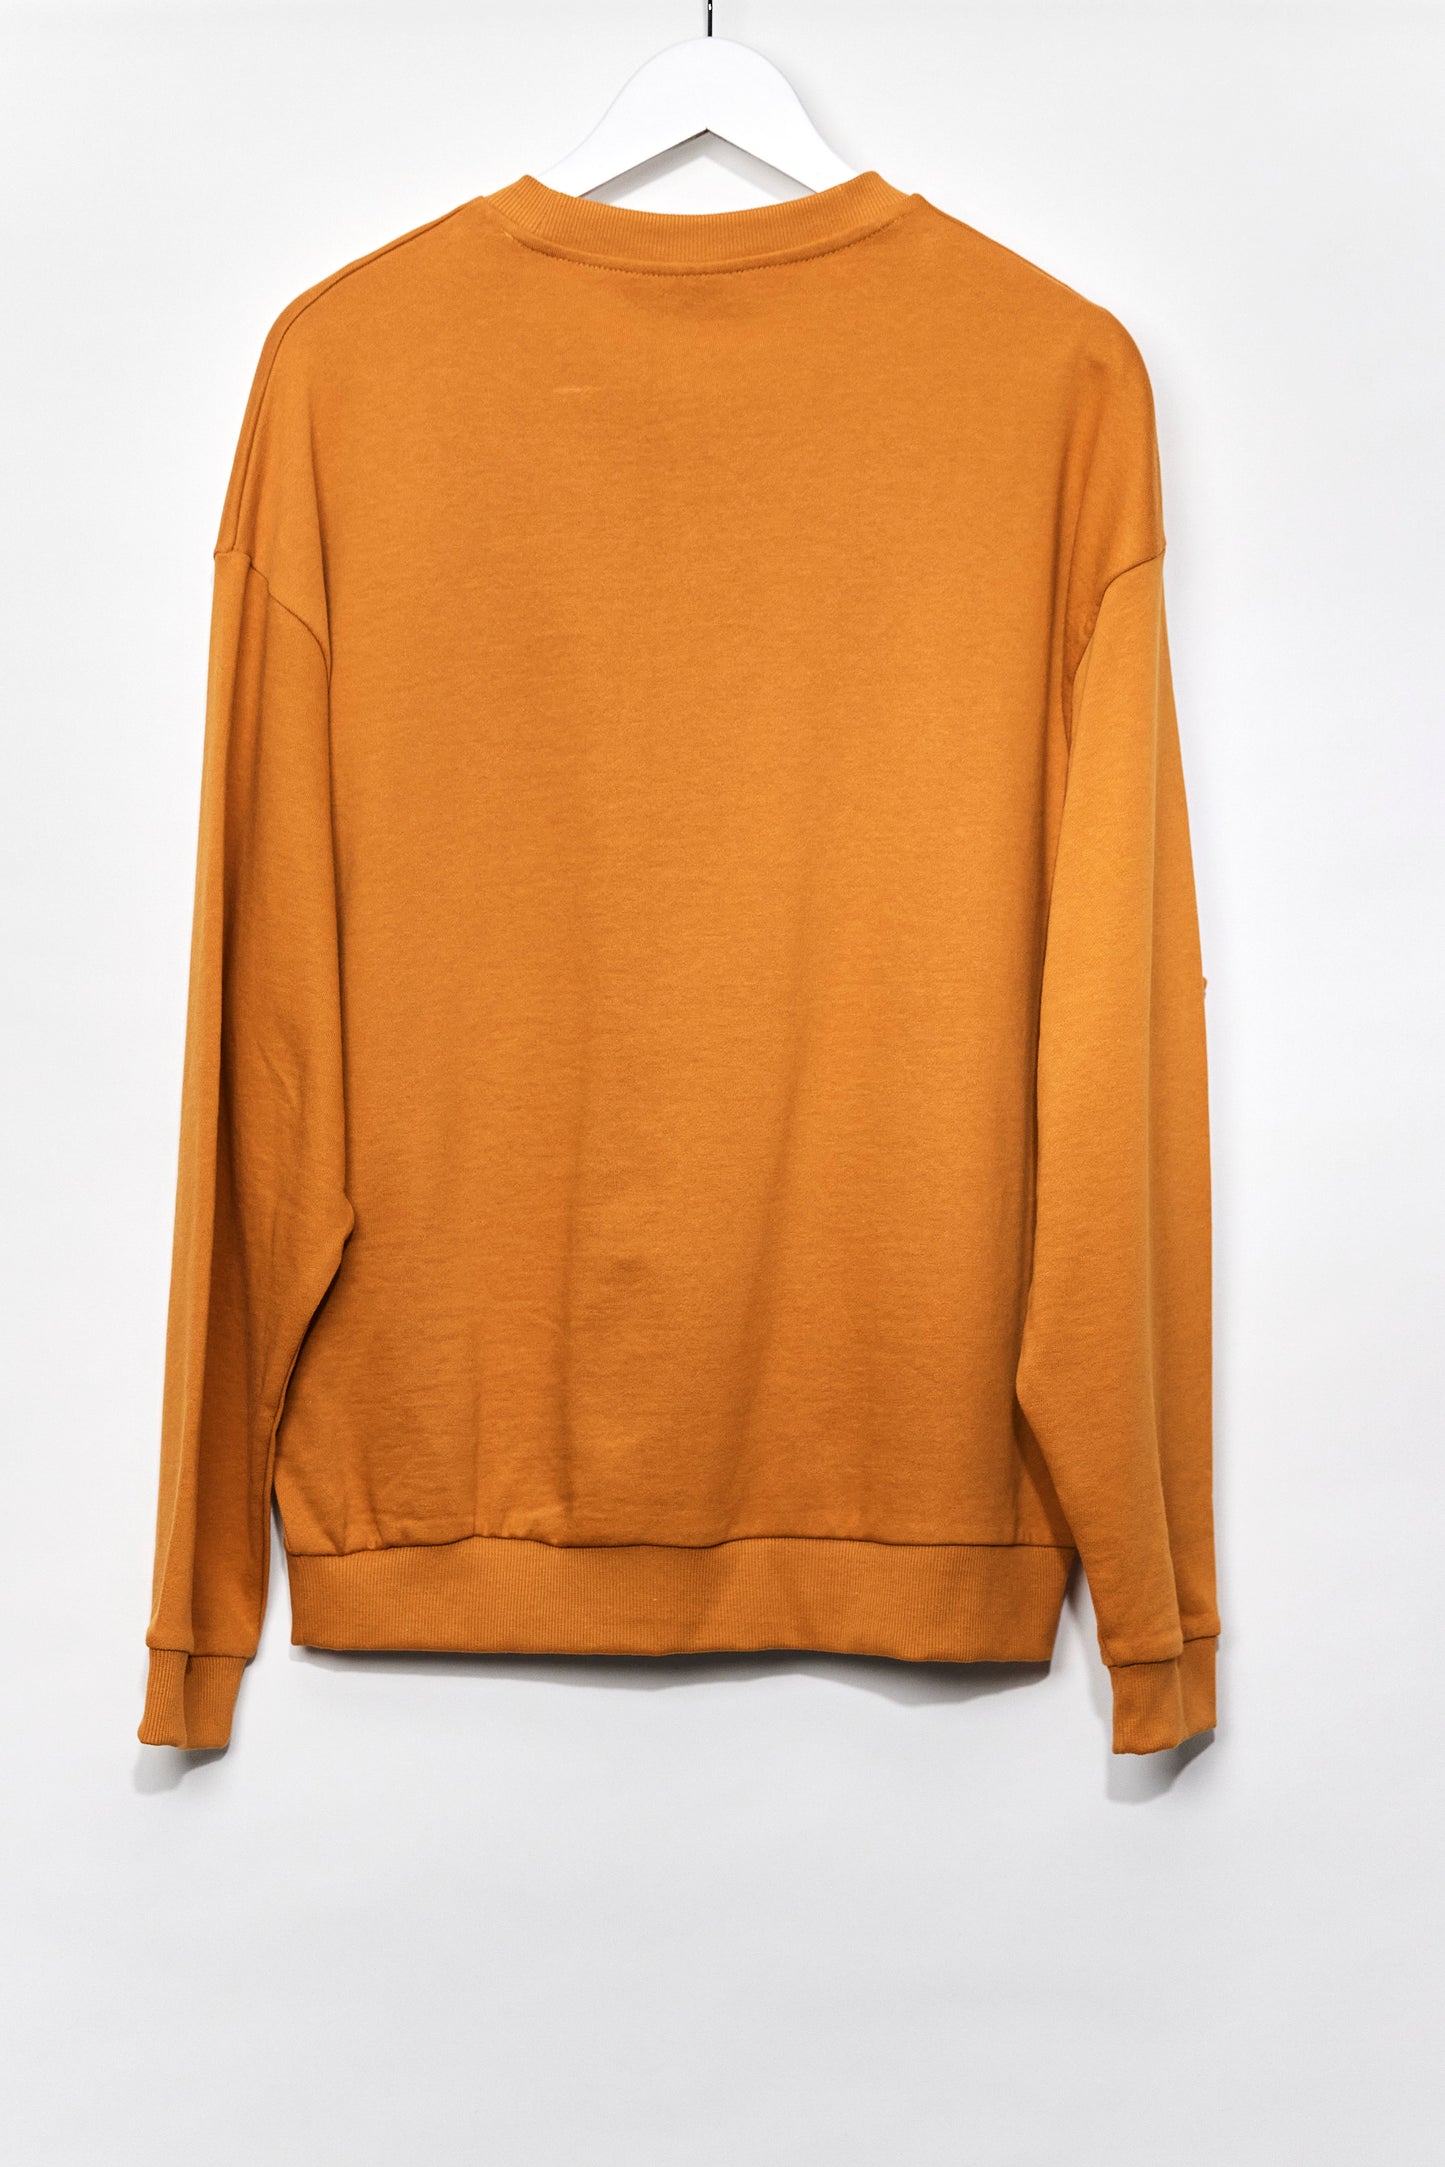 Mens ASOS Orange Sweatshirt size Small